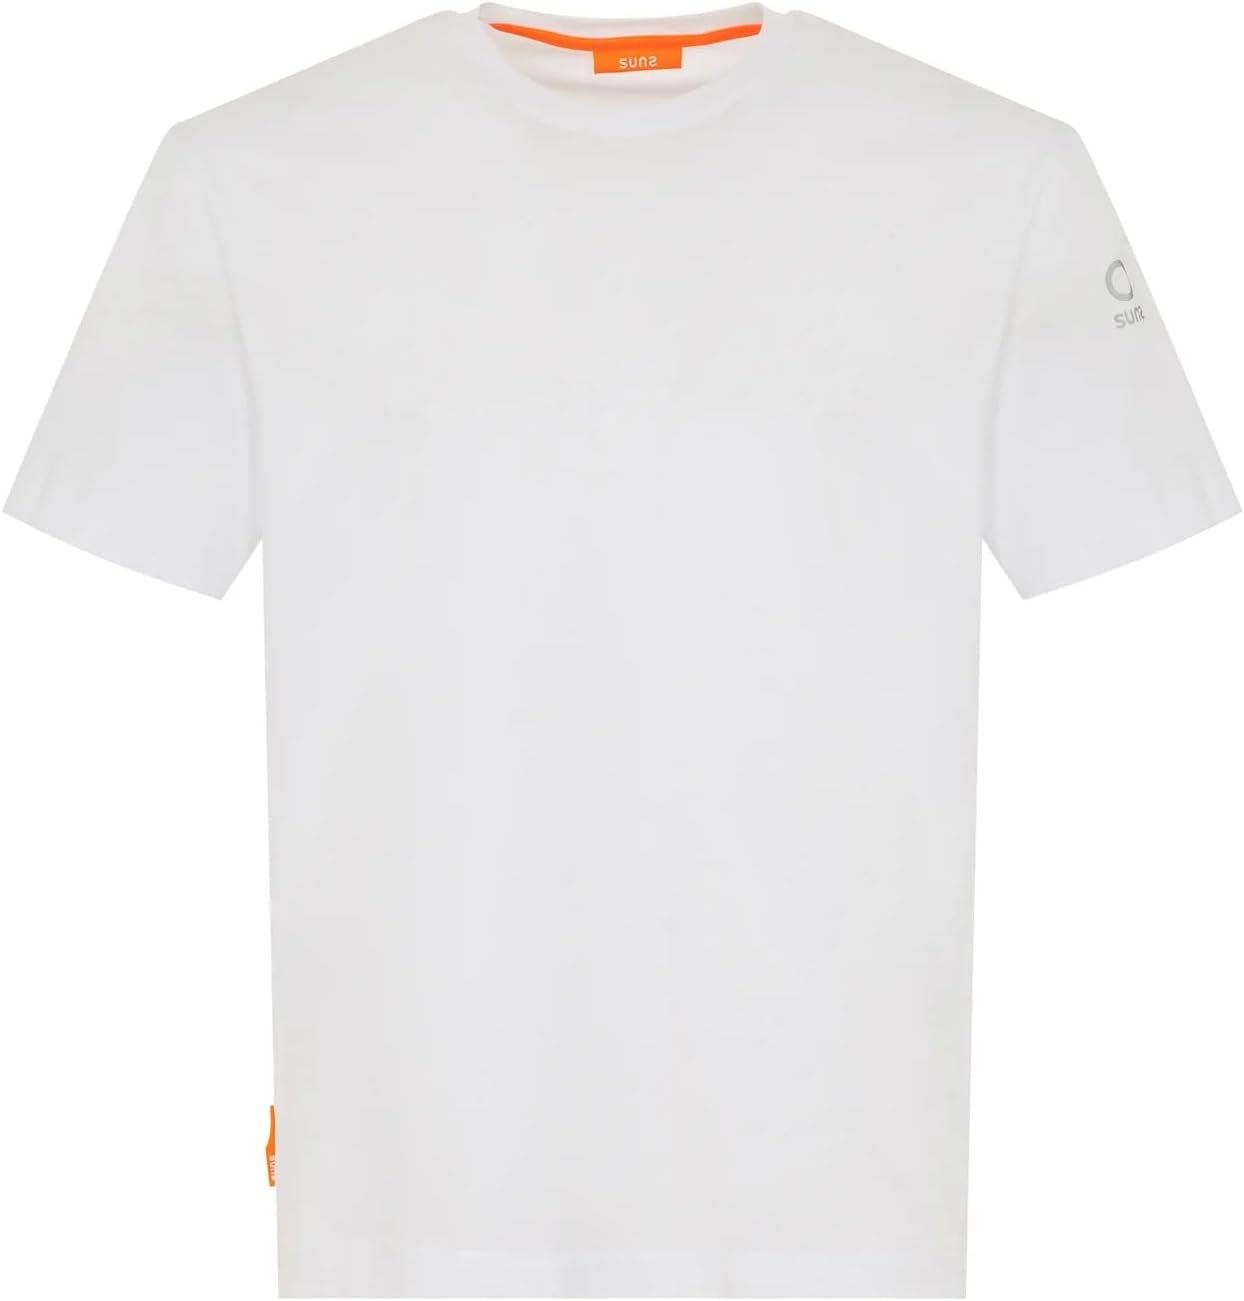 SUNS T-shirt Uomo - Bianco modello TSS41005U